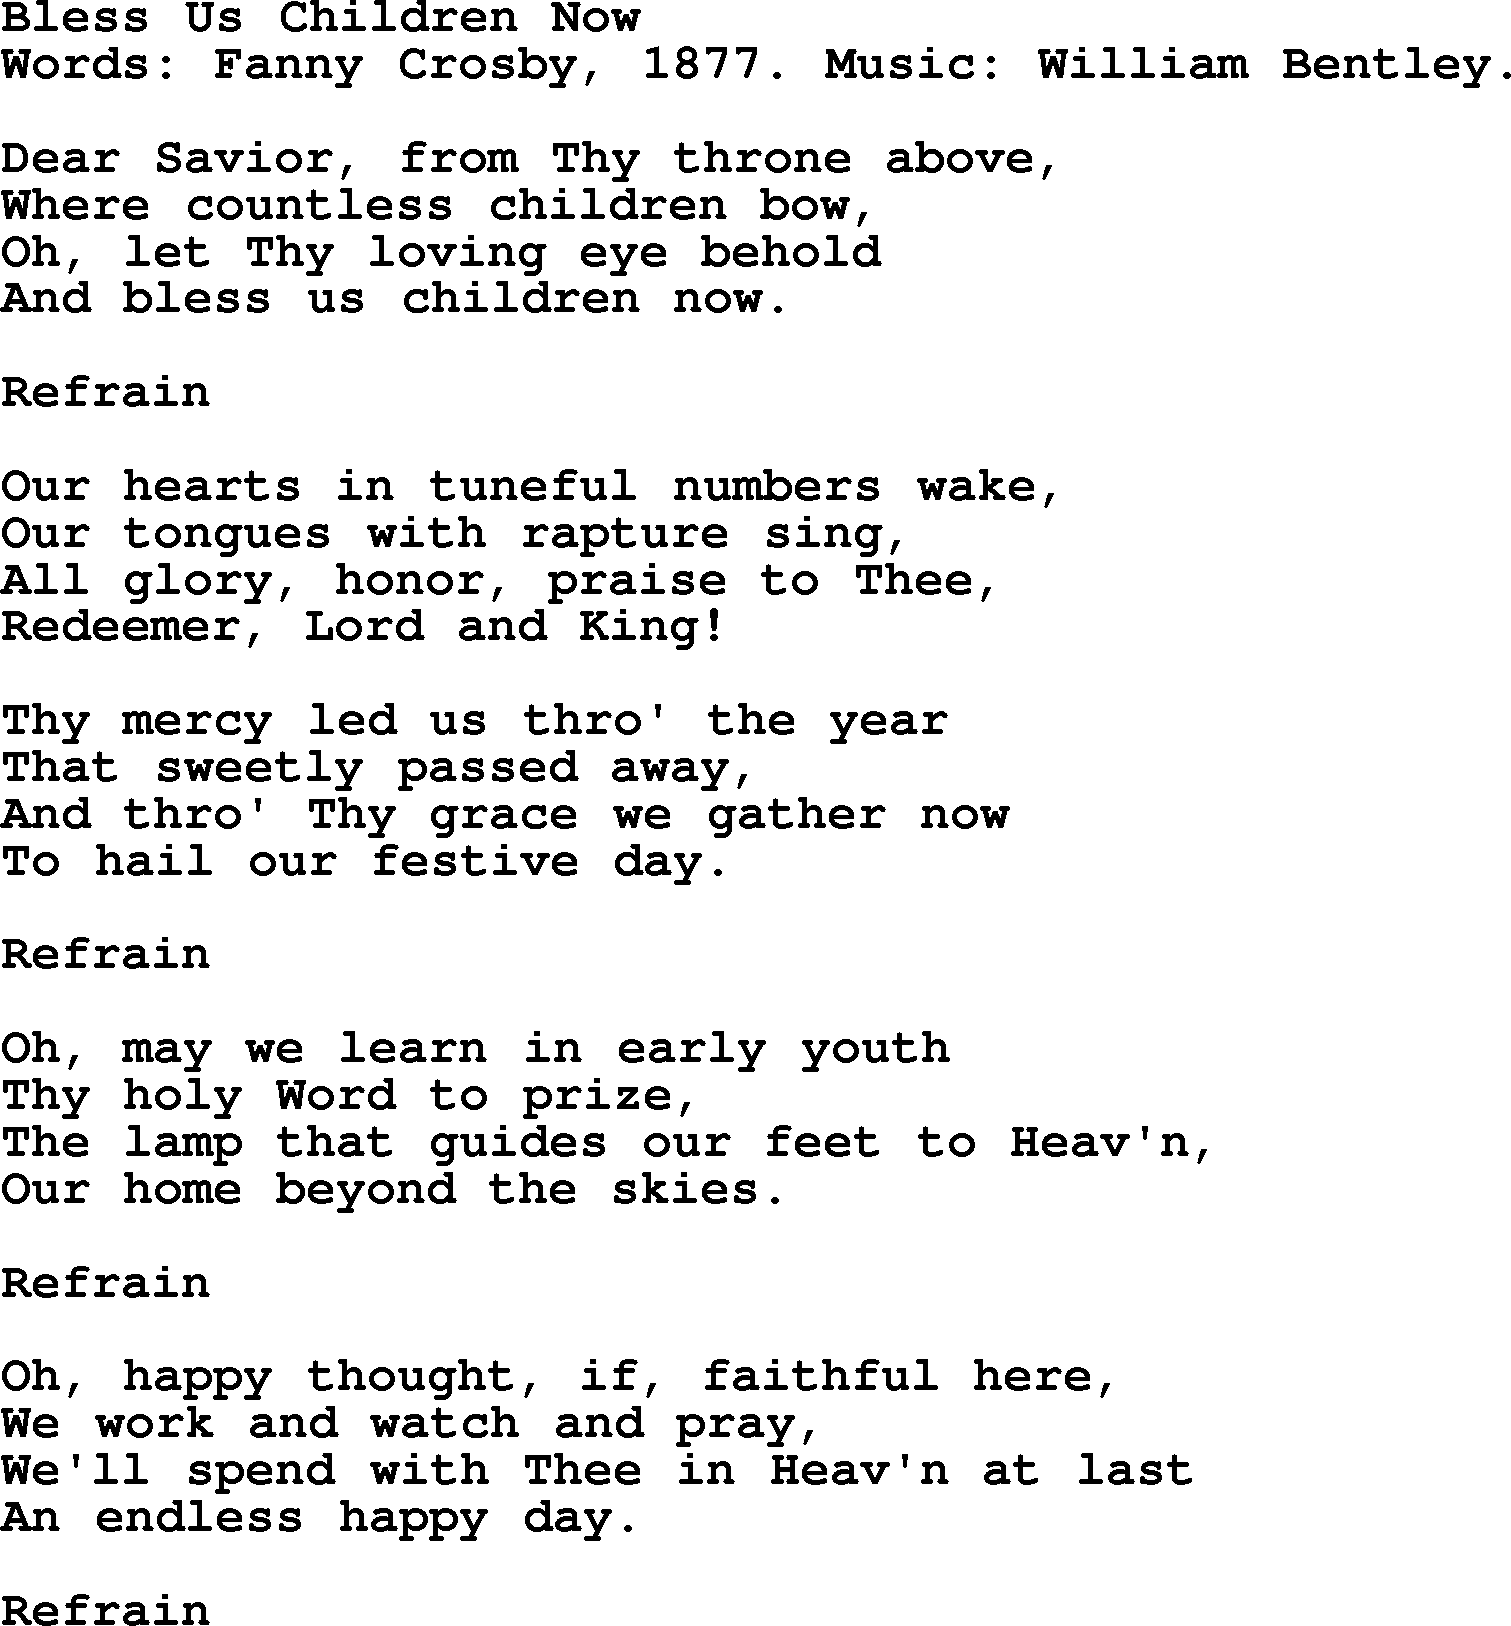 Fanny Crosby song: Bless Us Children Now, lyrics